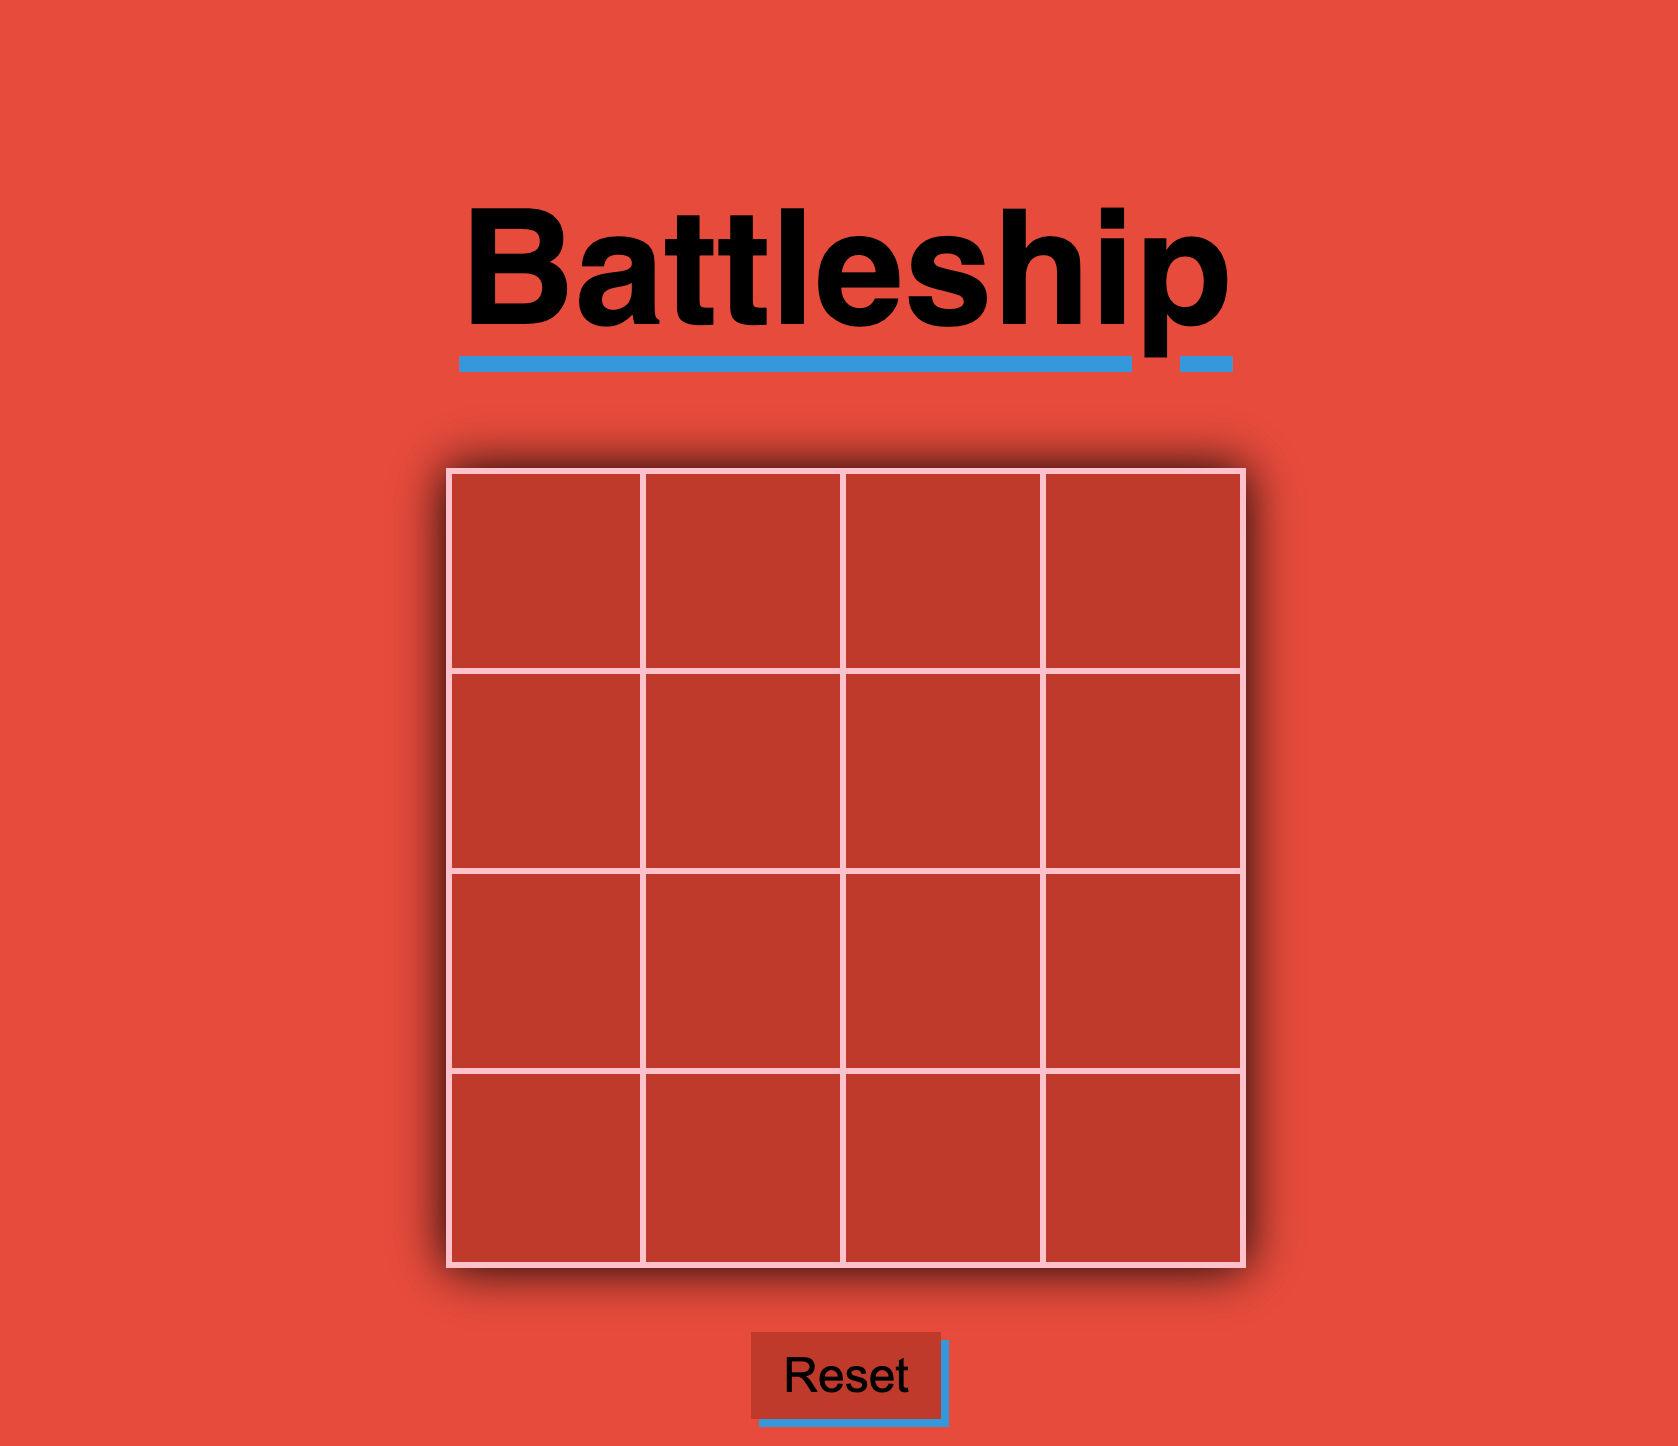 Battleship Game Project